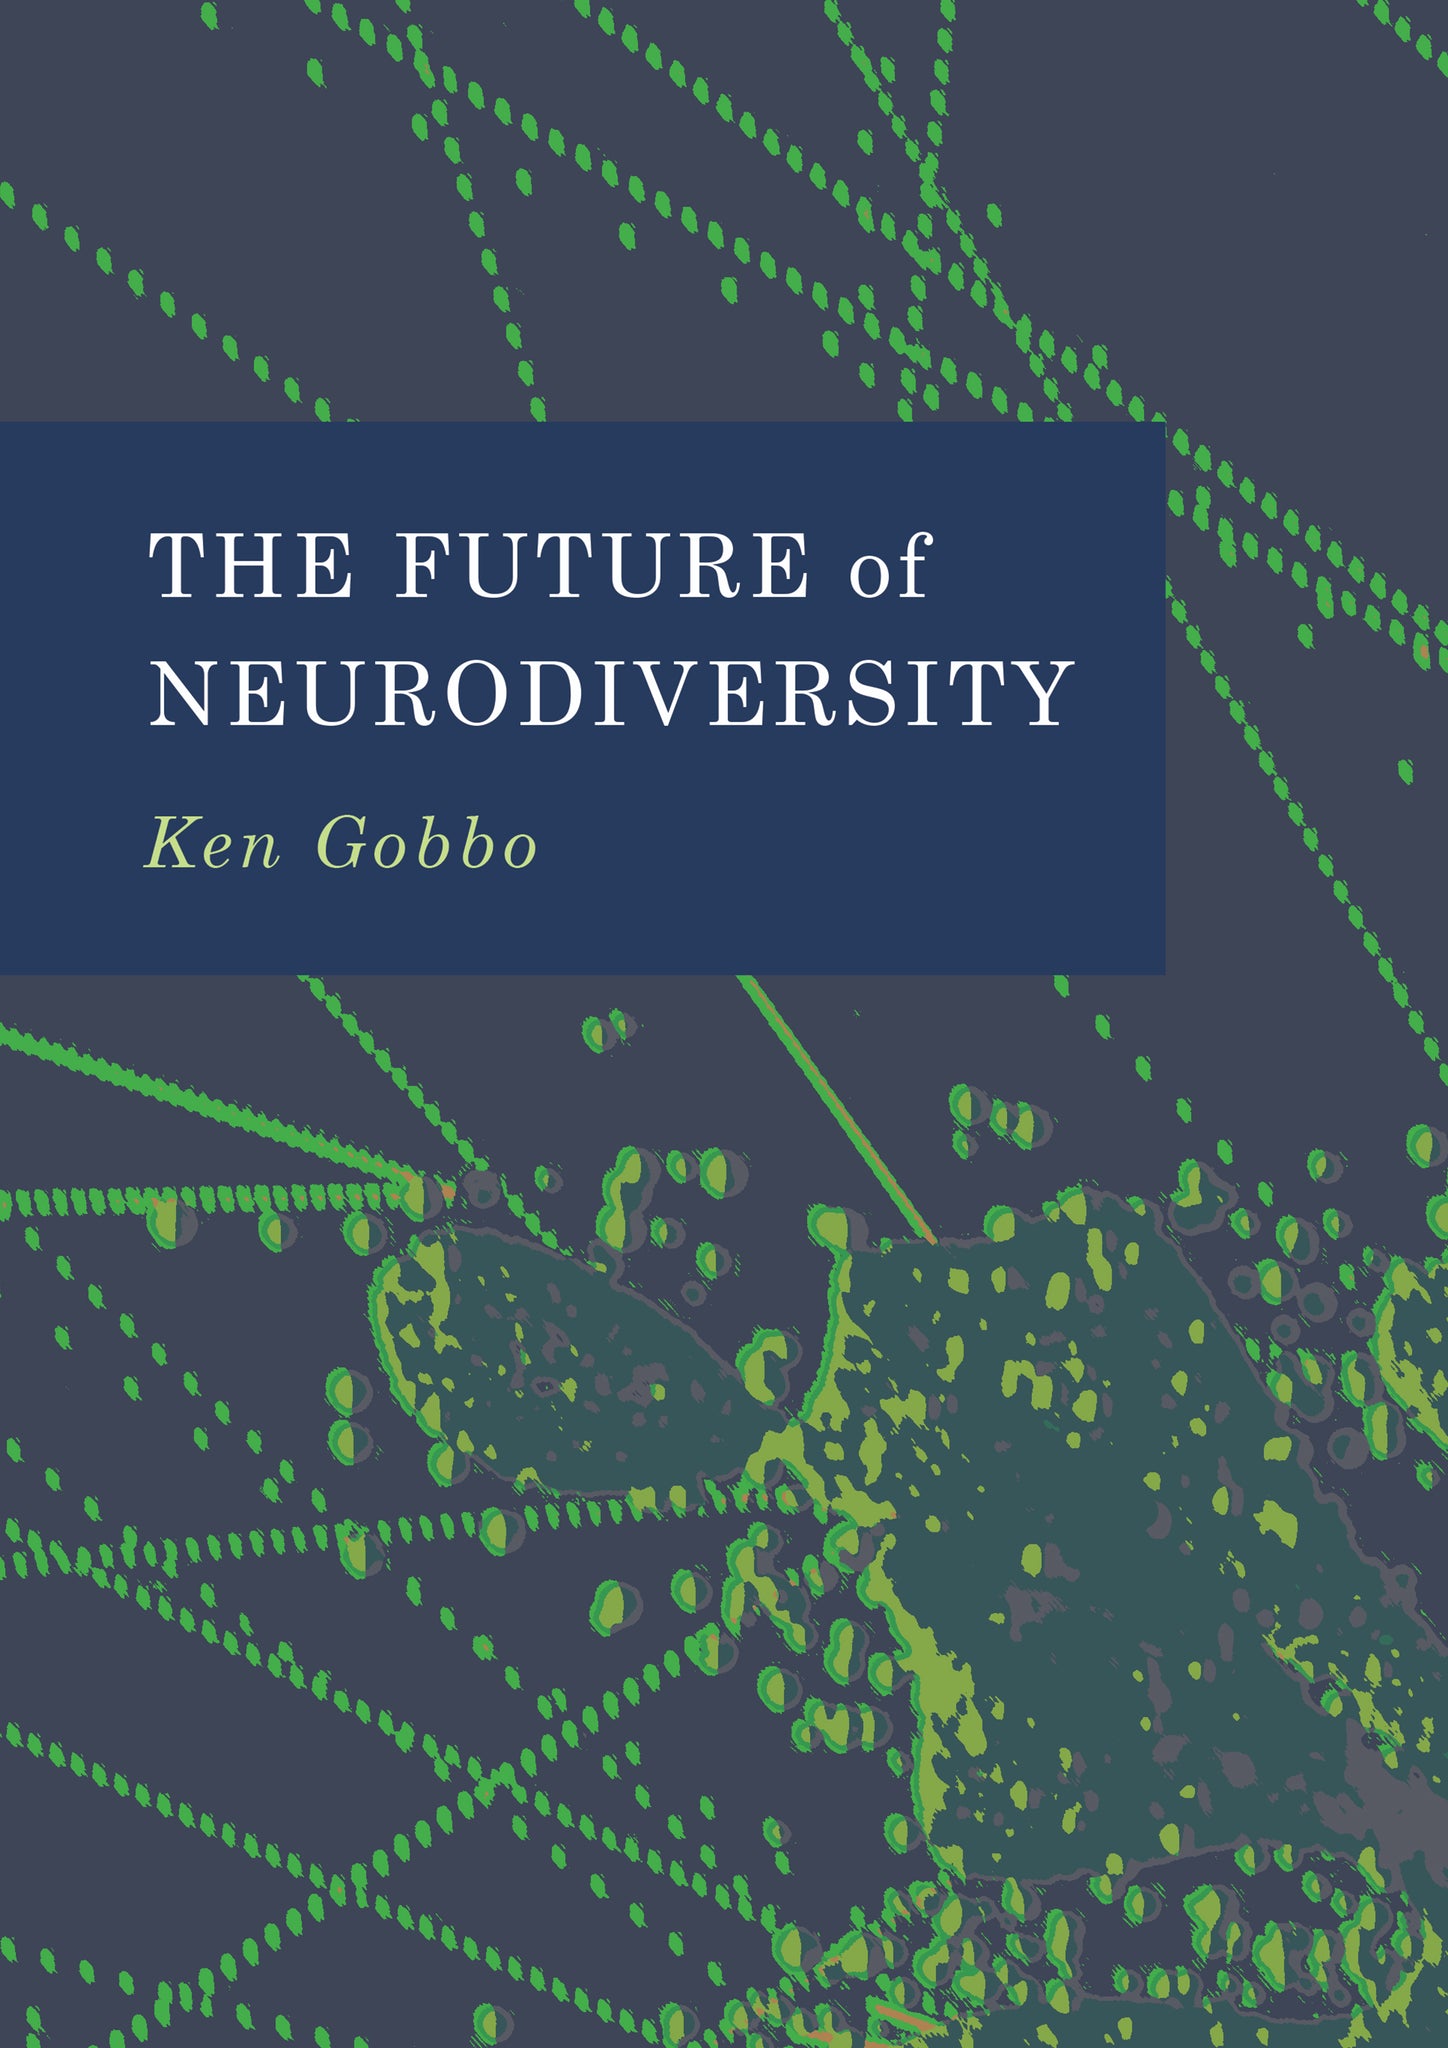 The Future of Neurodiversity